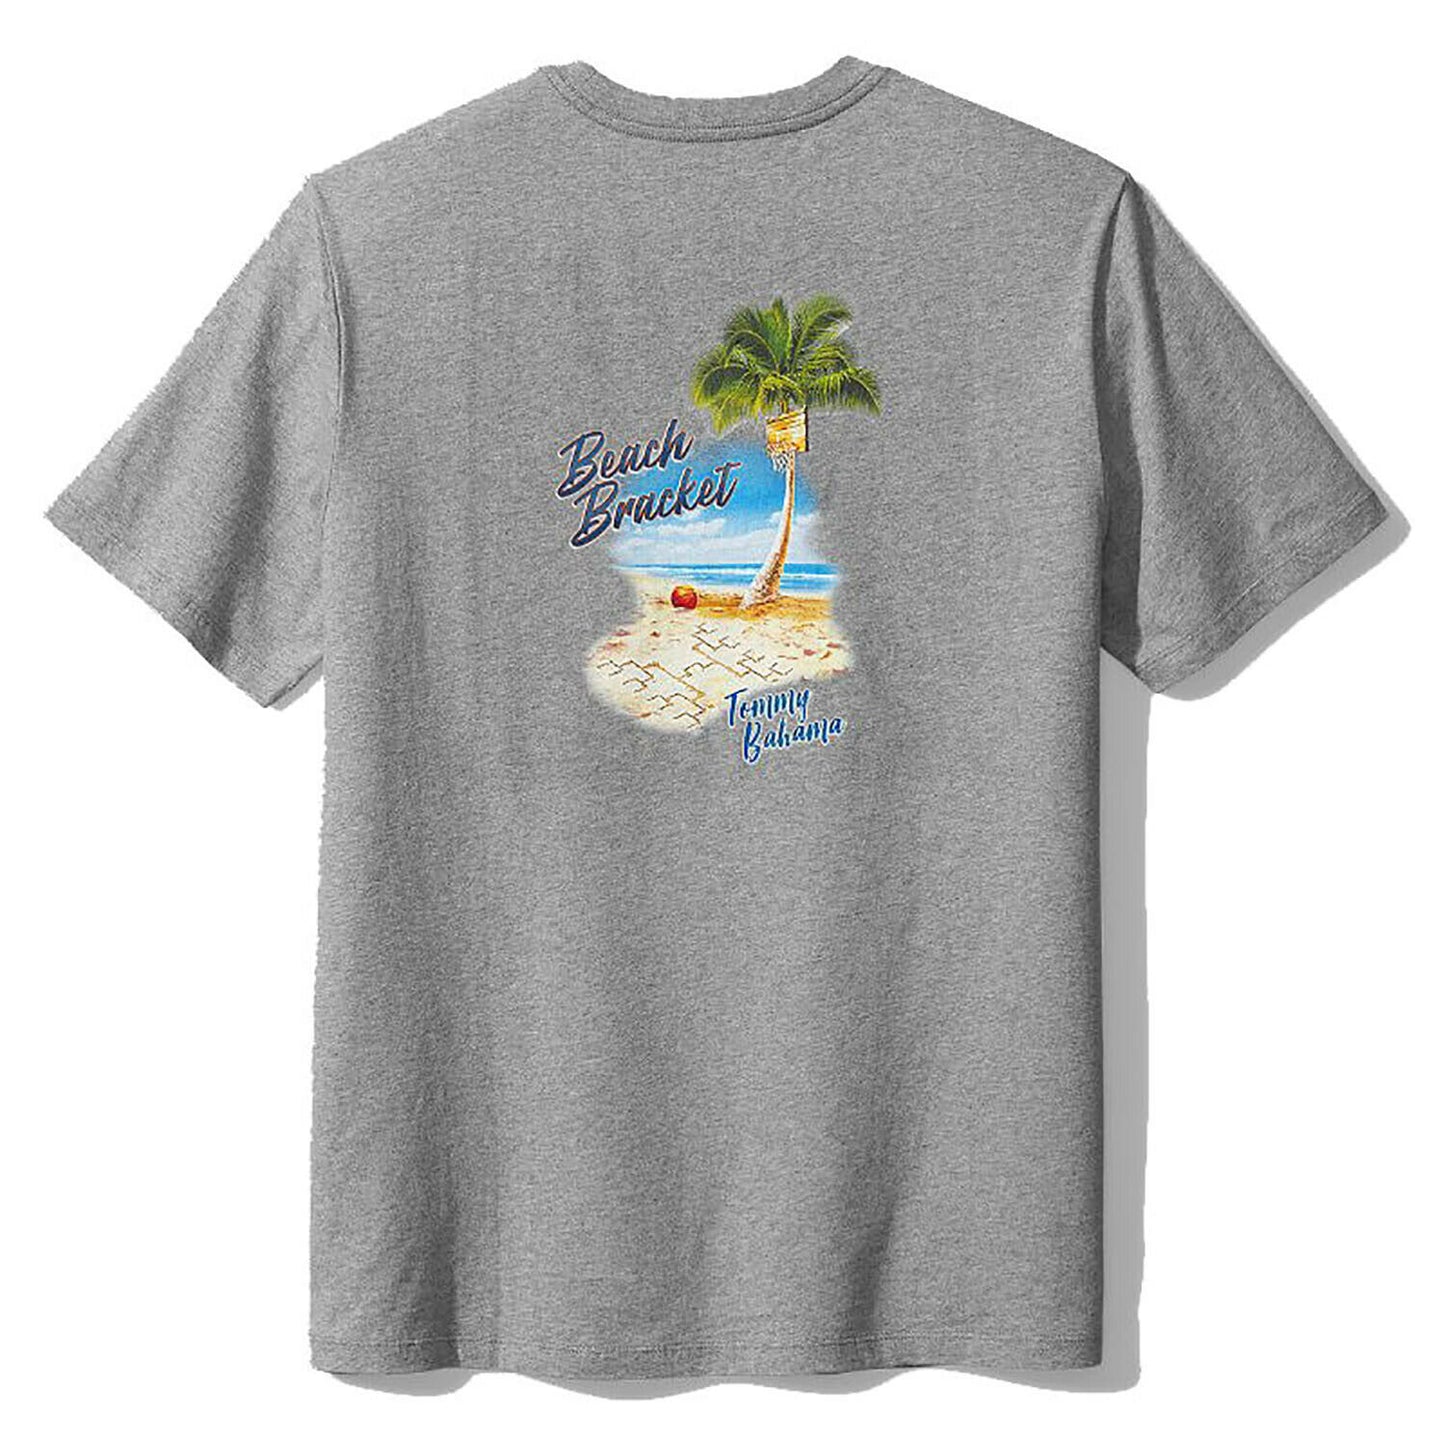 TOMMY BAHAMA Beach Bracket Men's T-Shirt - Grey - S M L XL 2XL – MB T-SHIRTS